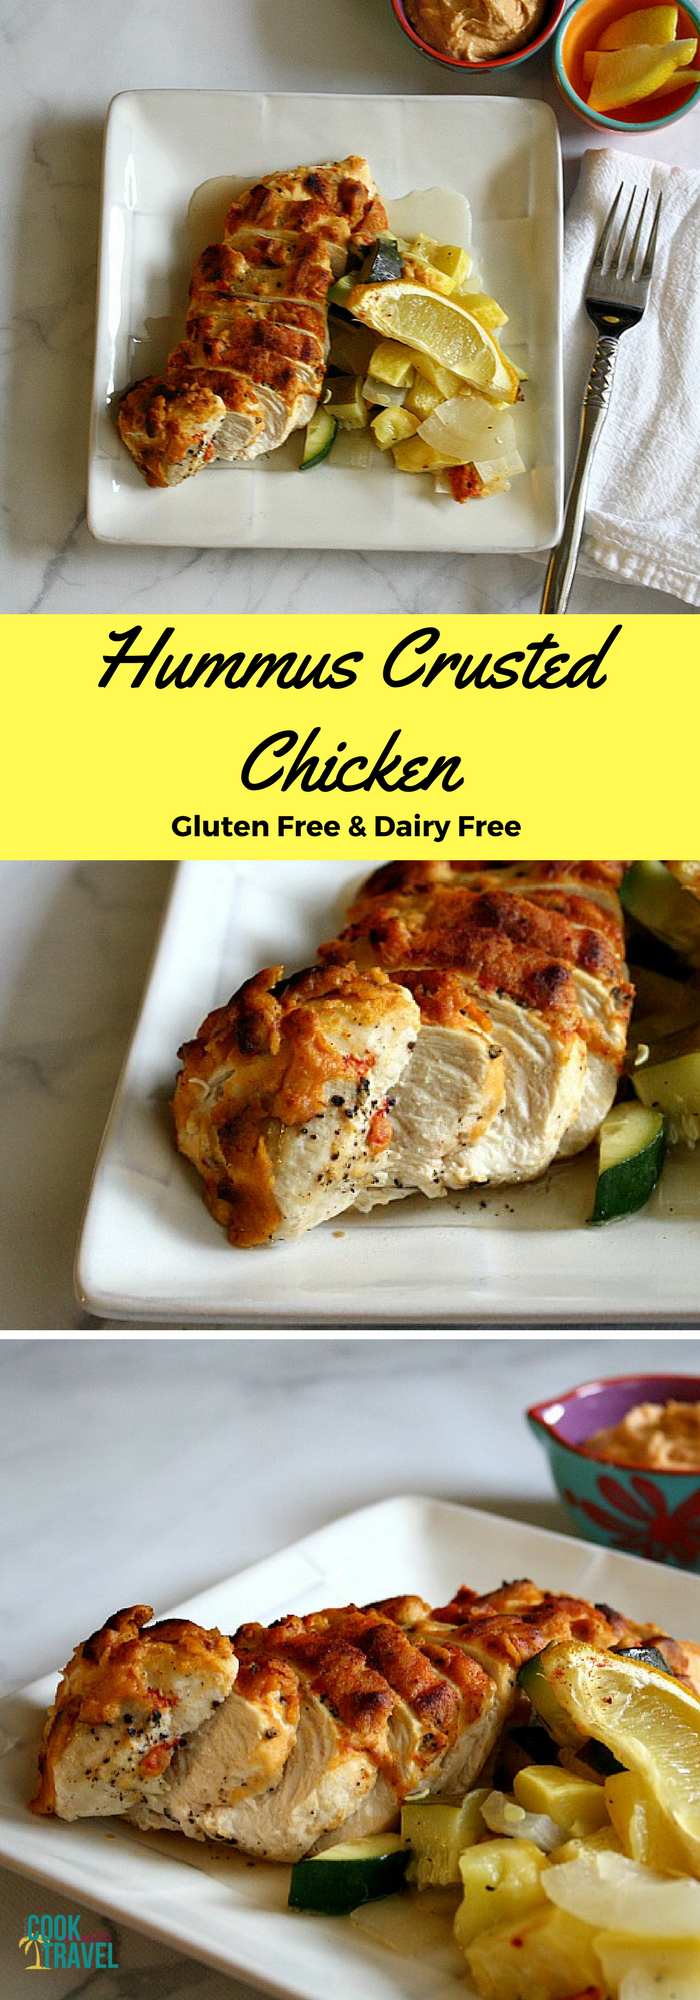 Hummus Crusted Chicken